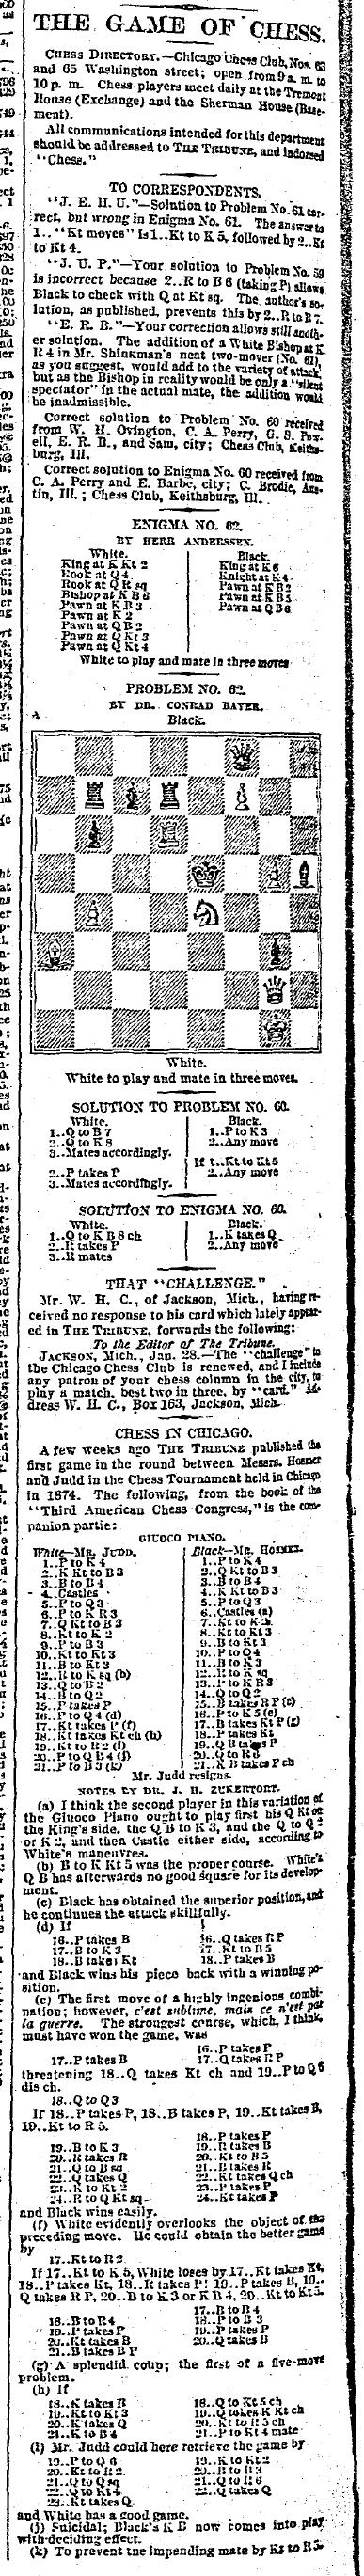 1877.02.04-01 Chicago Tribune.jpg